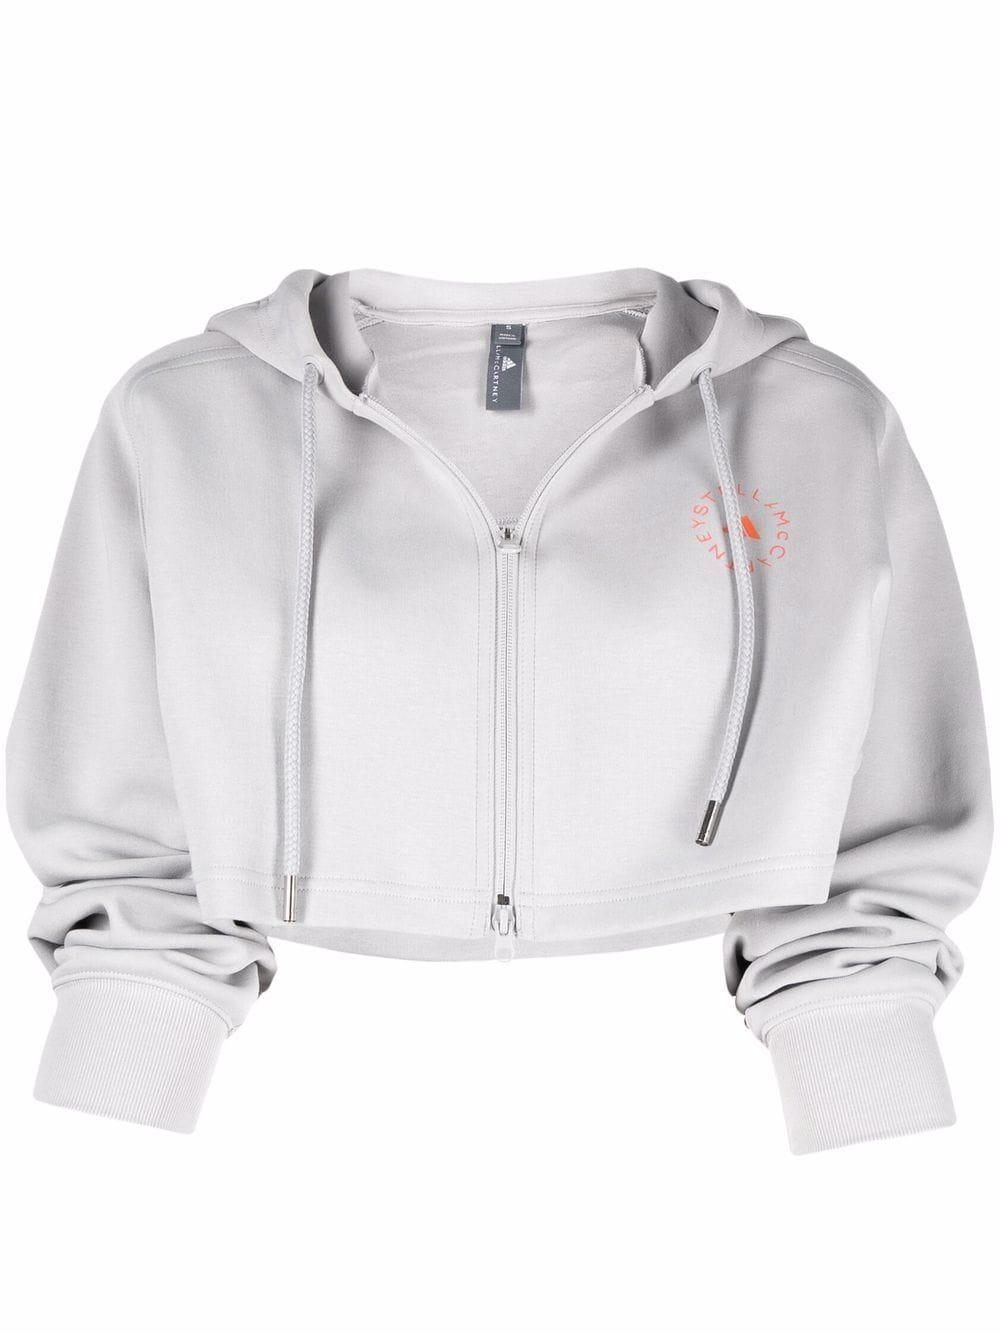 adidas by Stella McCartney cropped zip-up hoodie - Grey